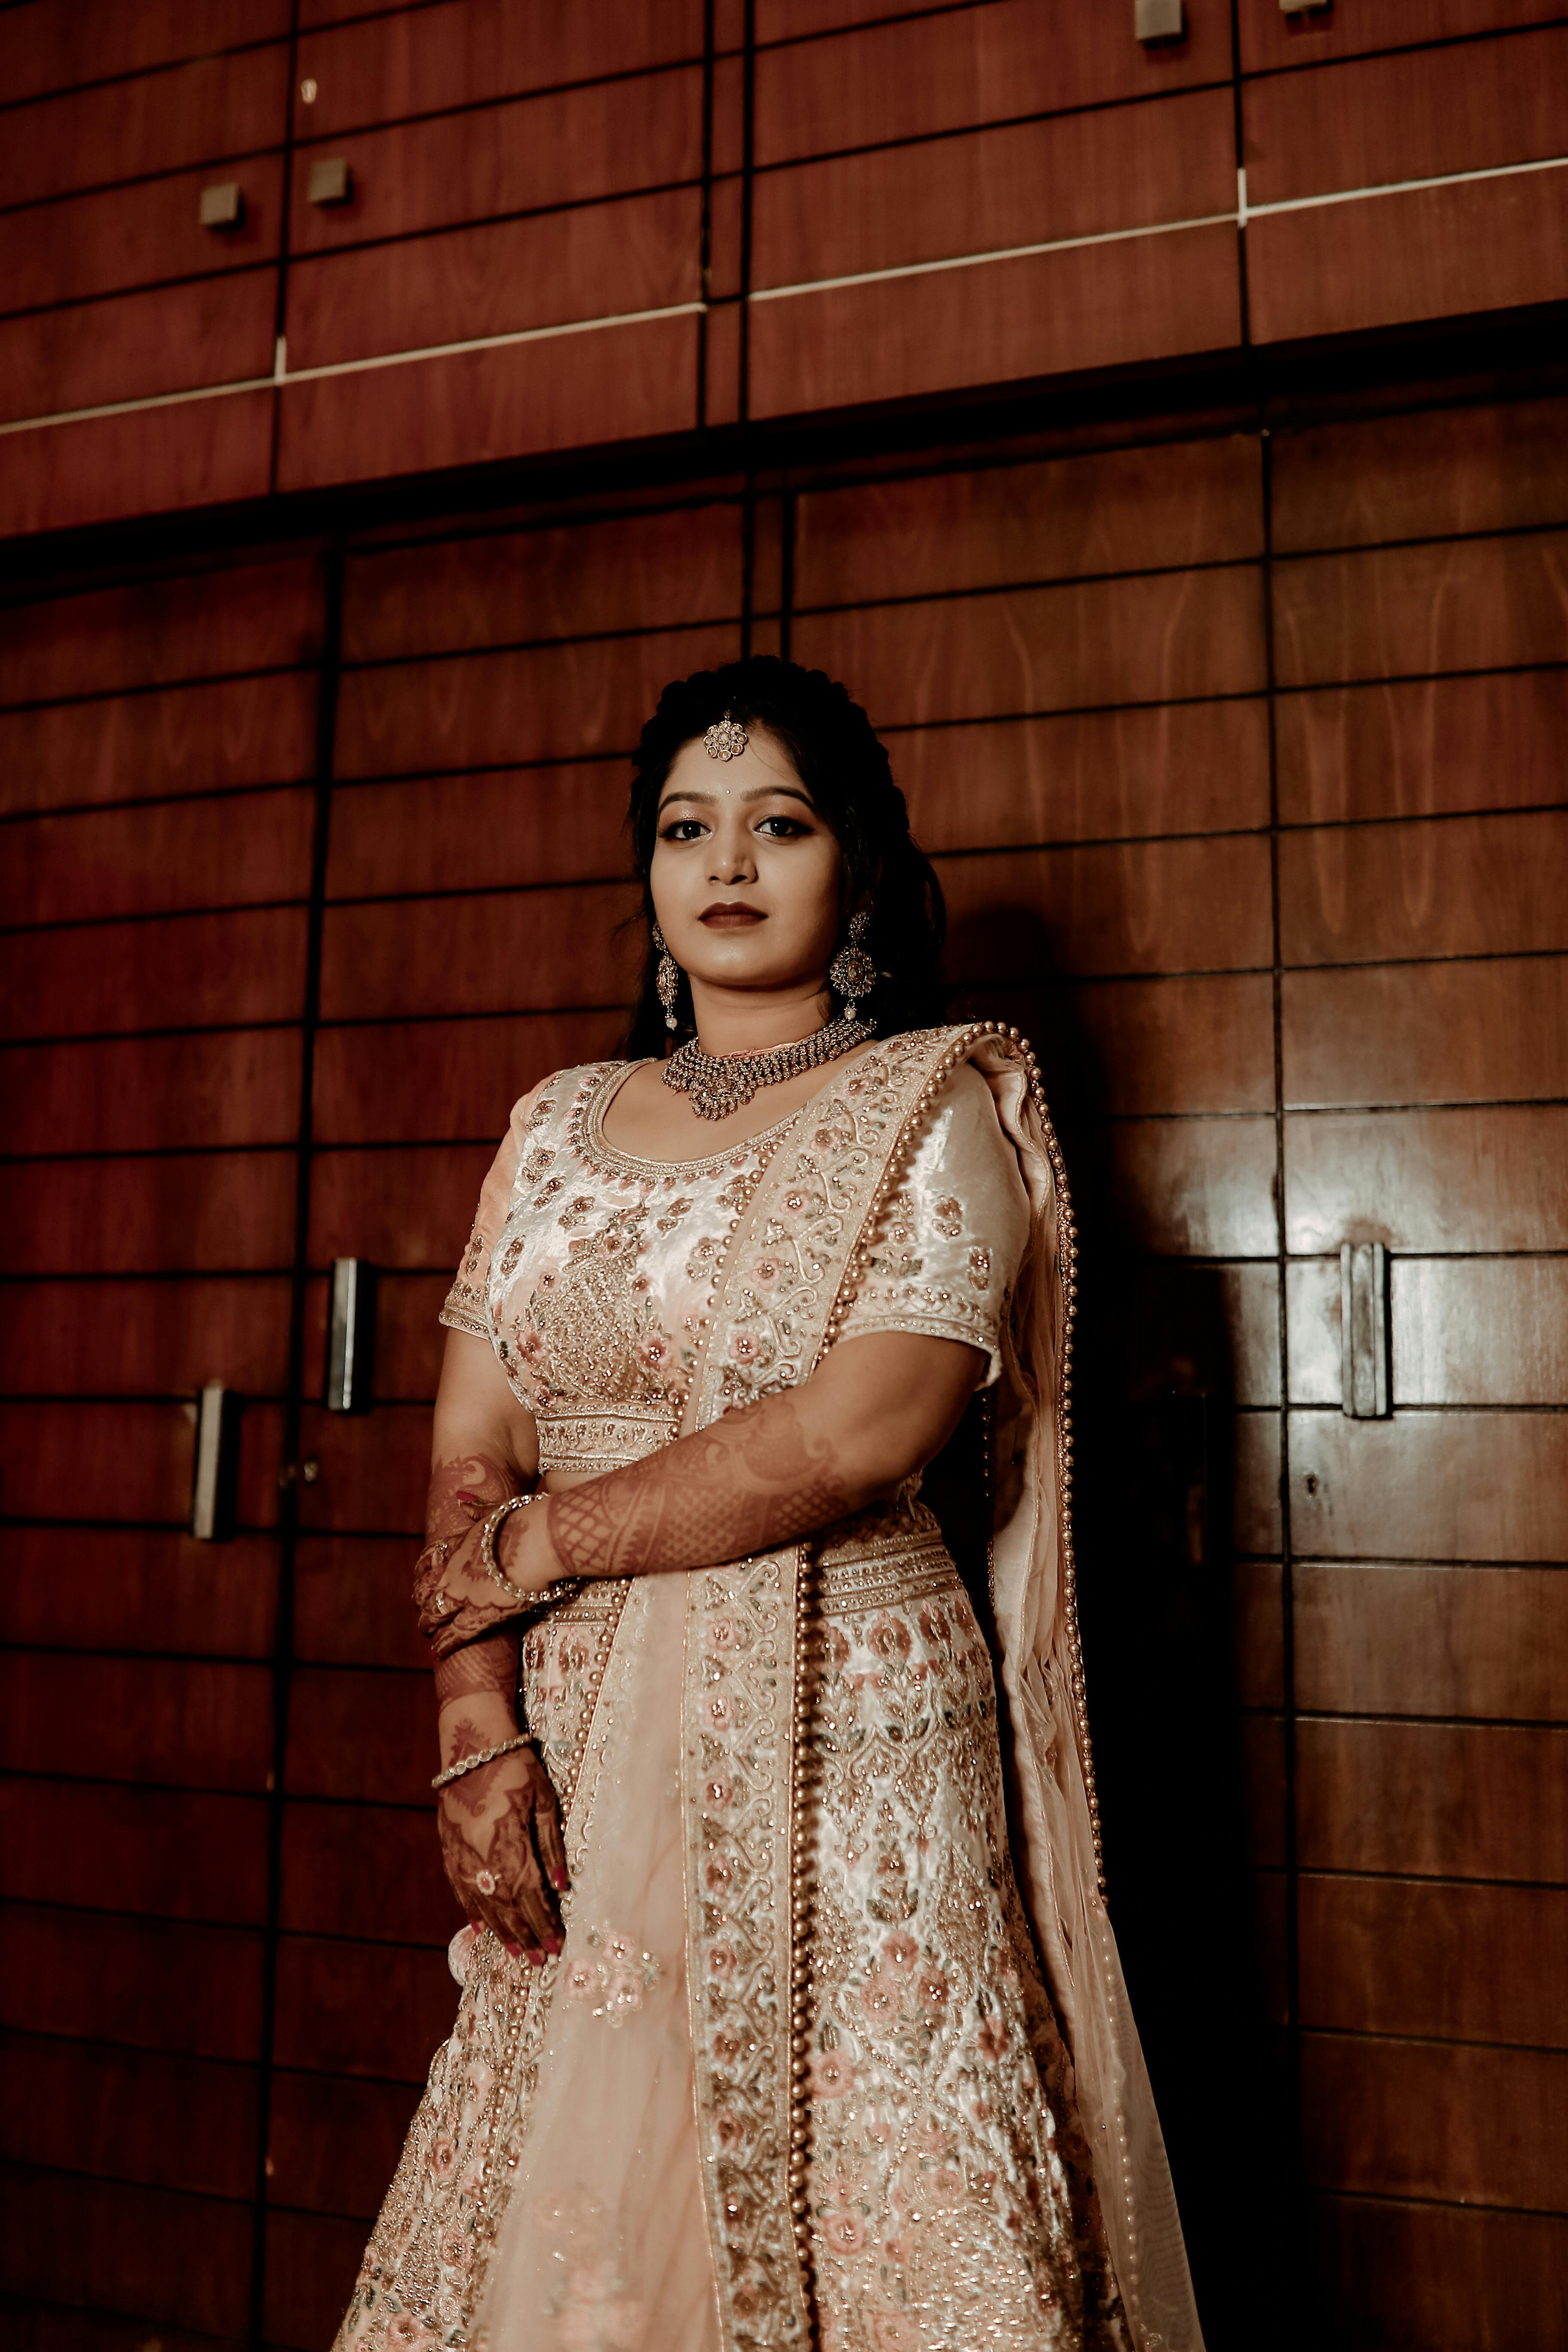 Bengali Bride editorial stock image. Image of asia, bride - 91906649